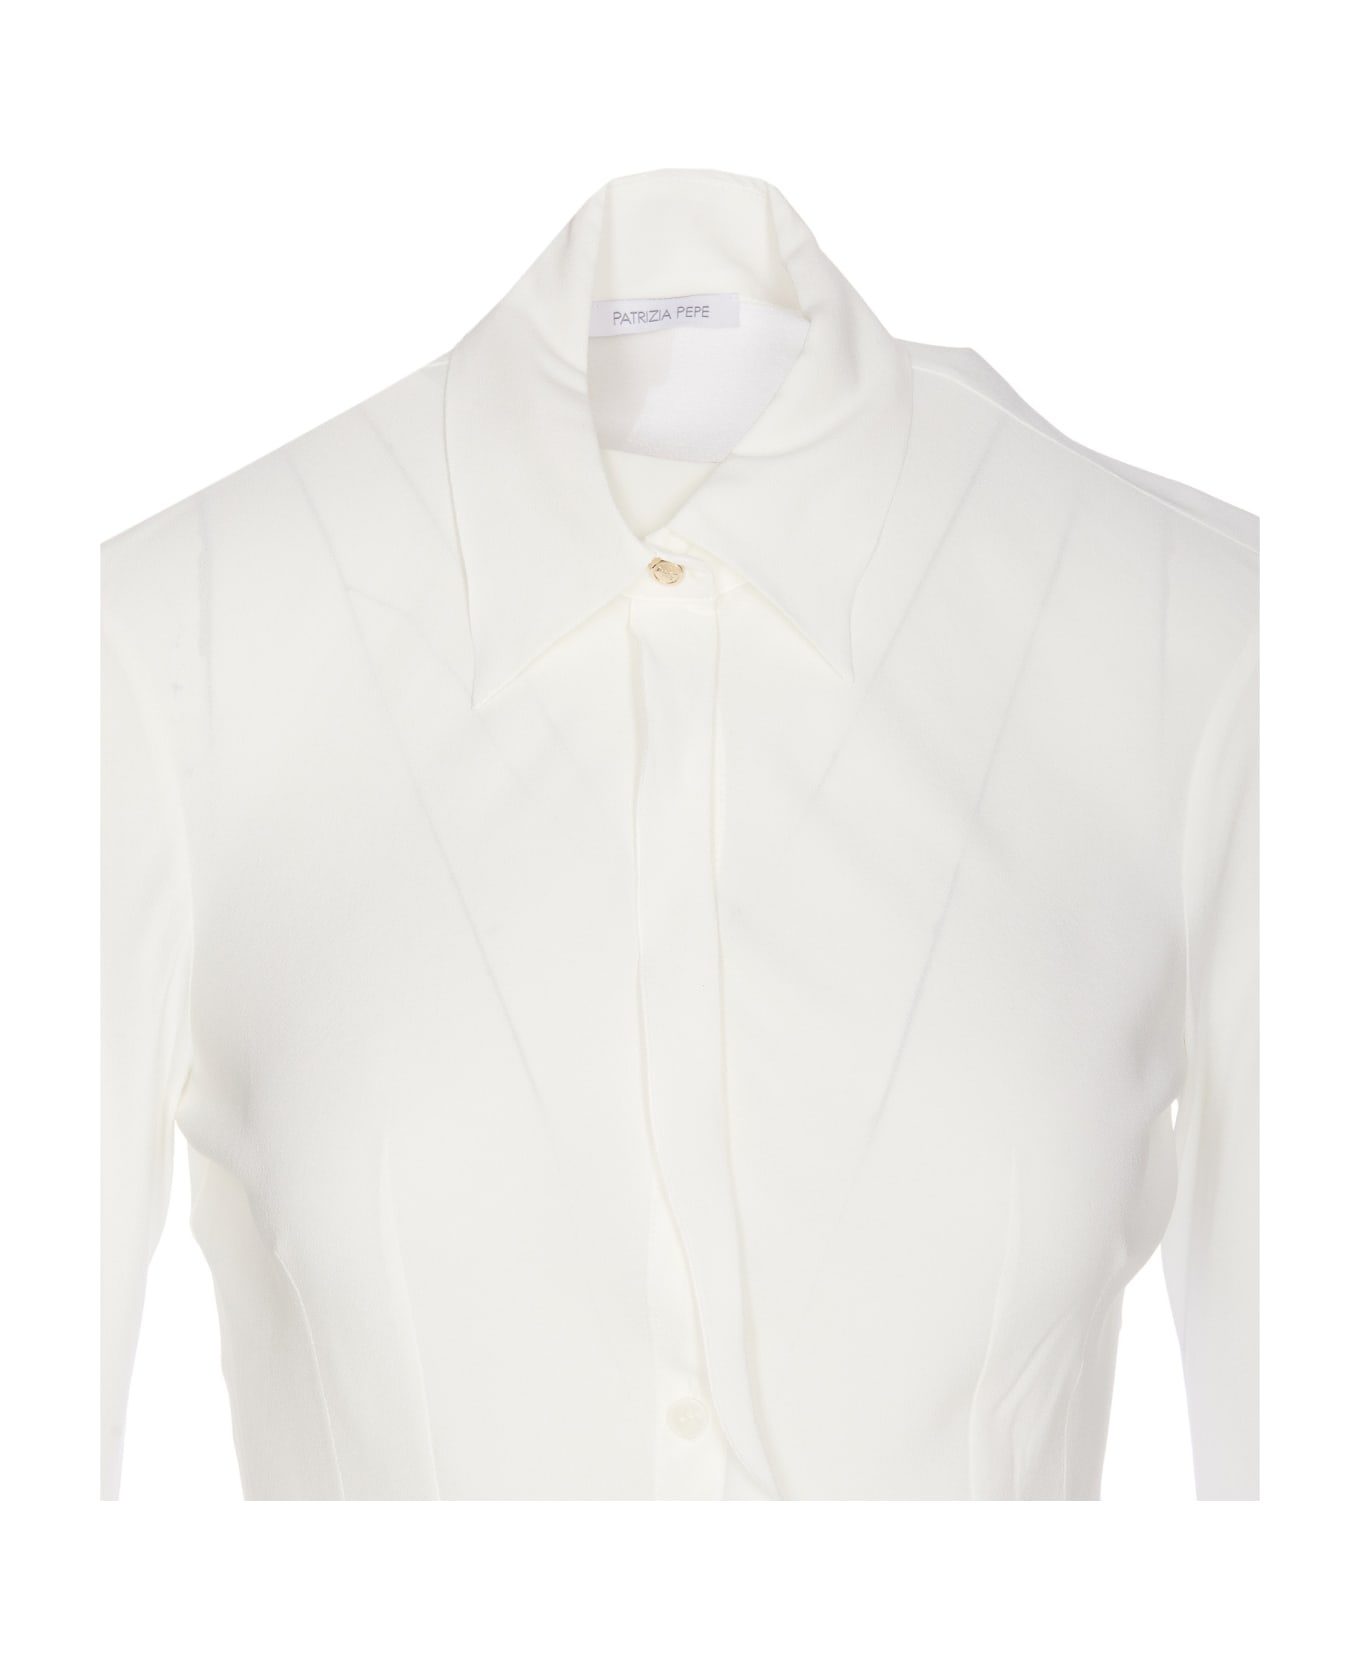 Patrizia Pepe Essential Soft Shirt - White